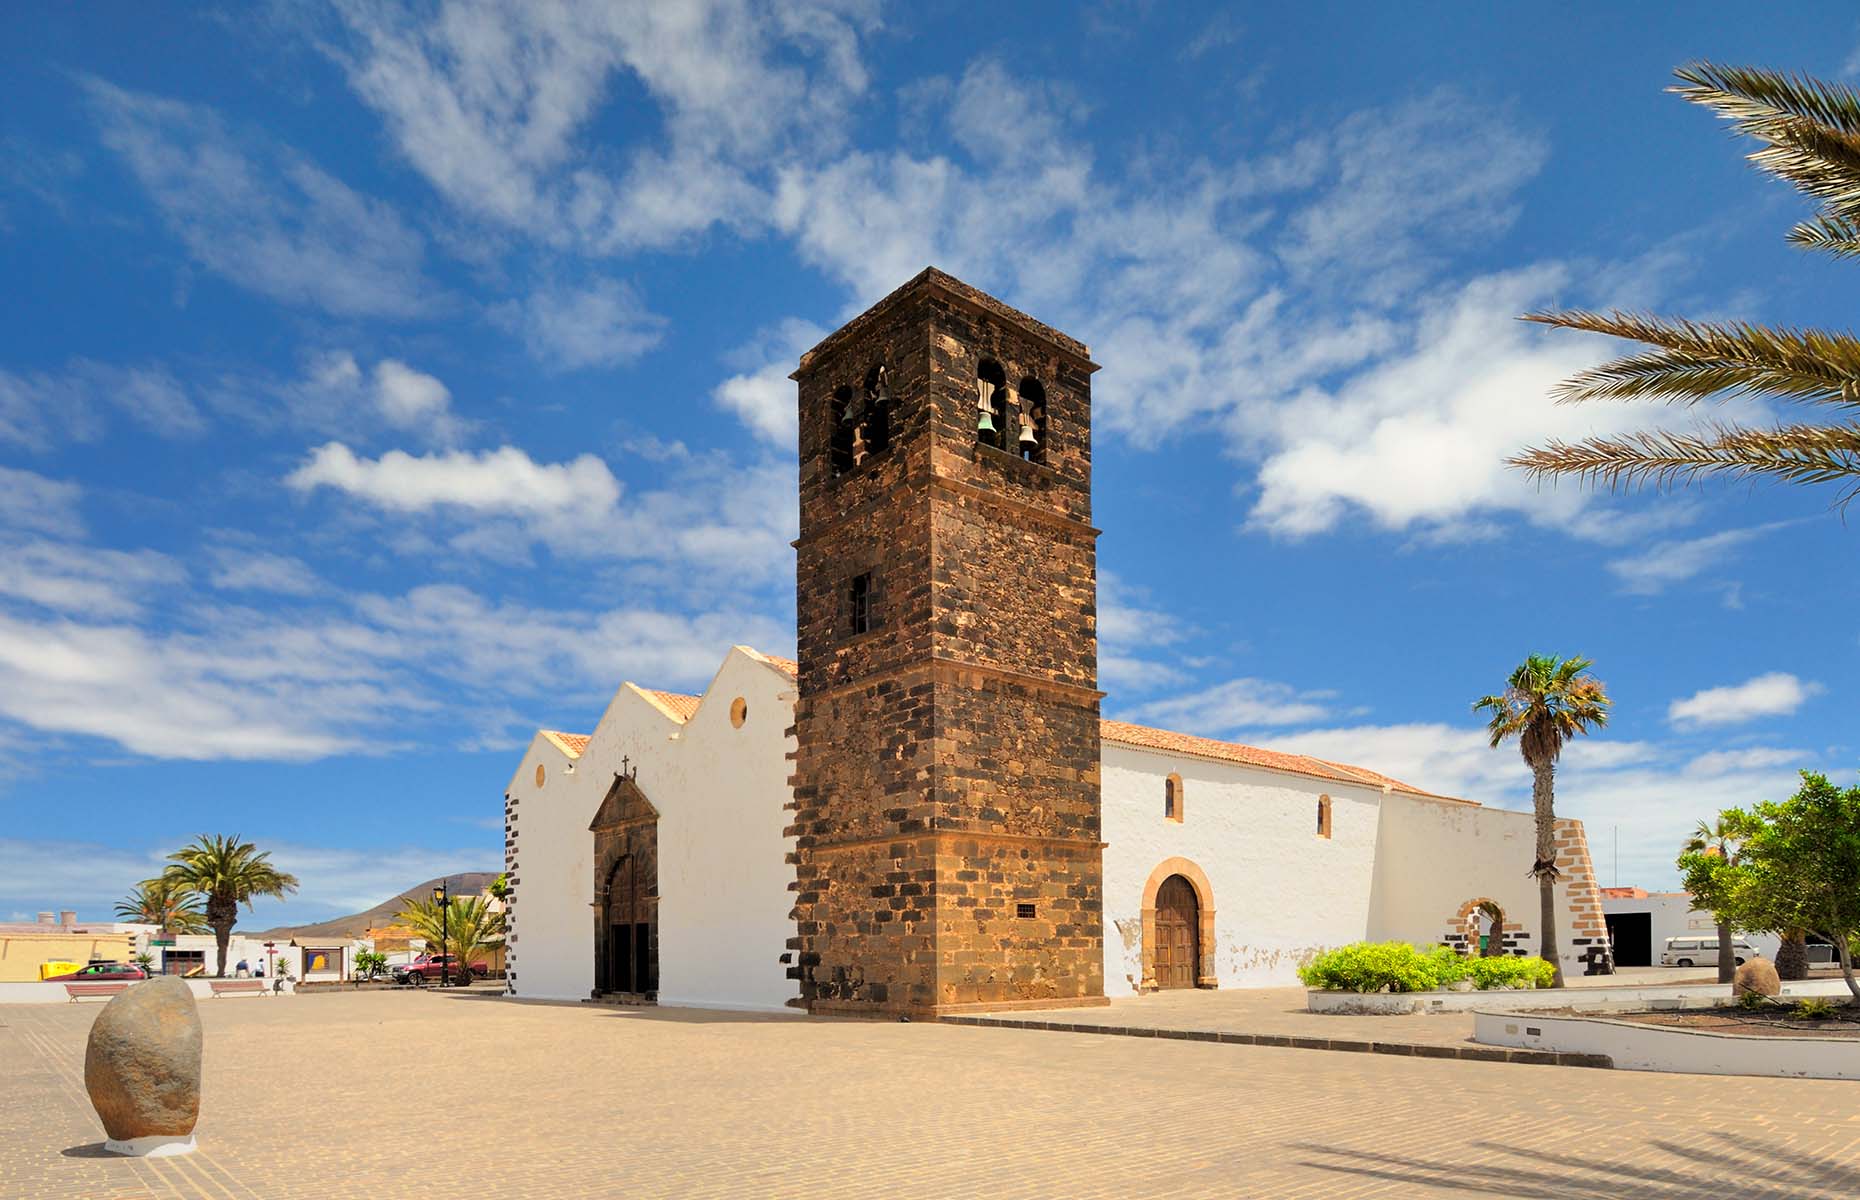 La Oliva in Fuerteventura (Image: Jan Miko/Shutterstock)